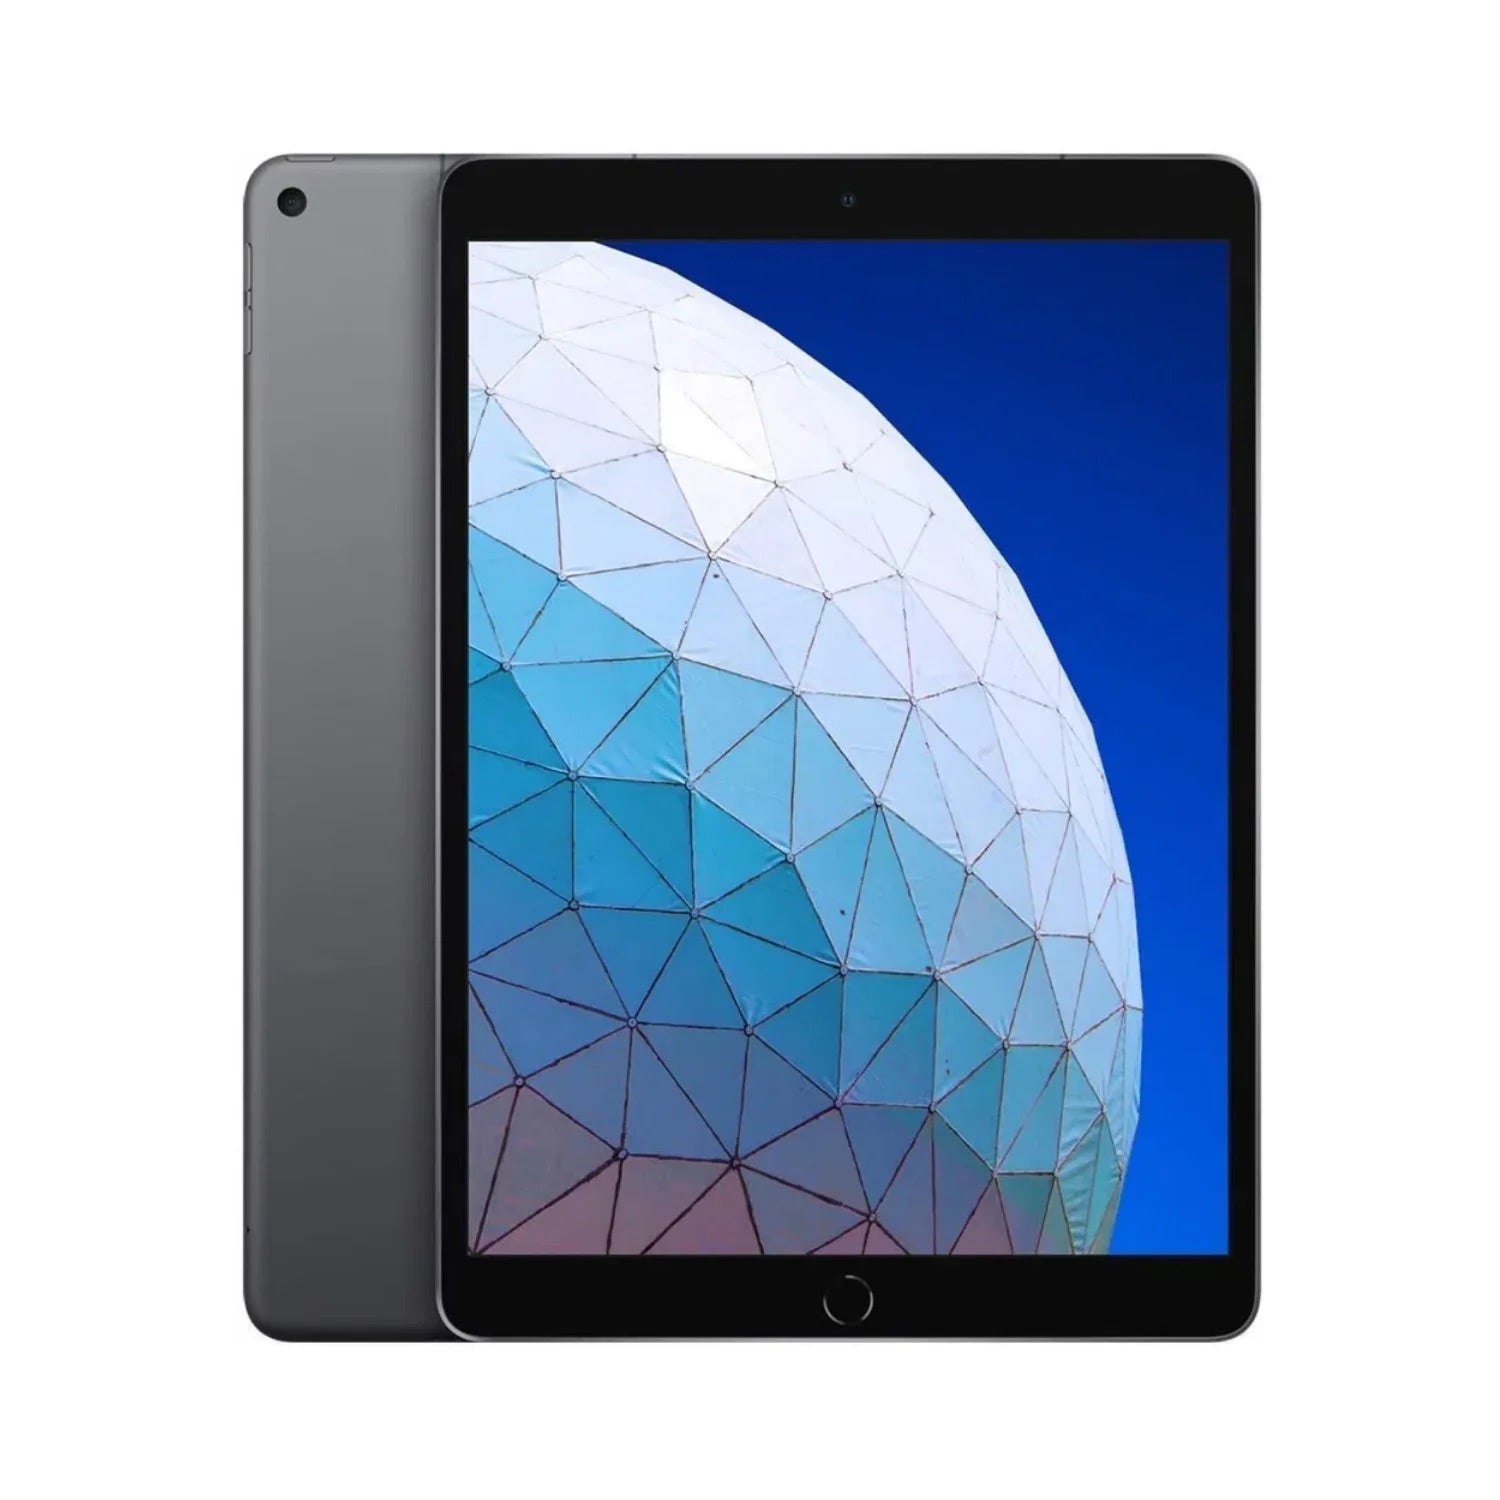 Pack Tablet: iPad Air (2 unidades)